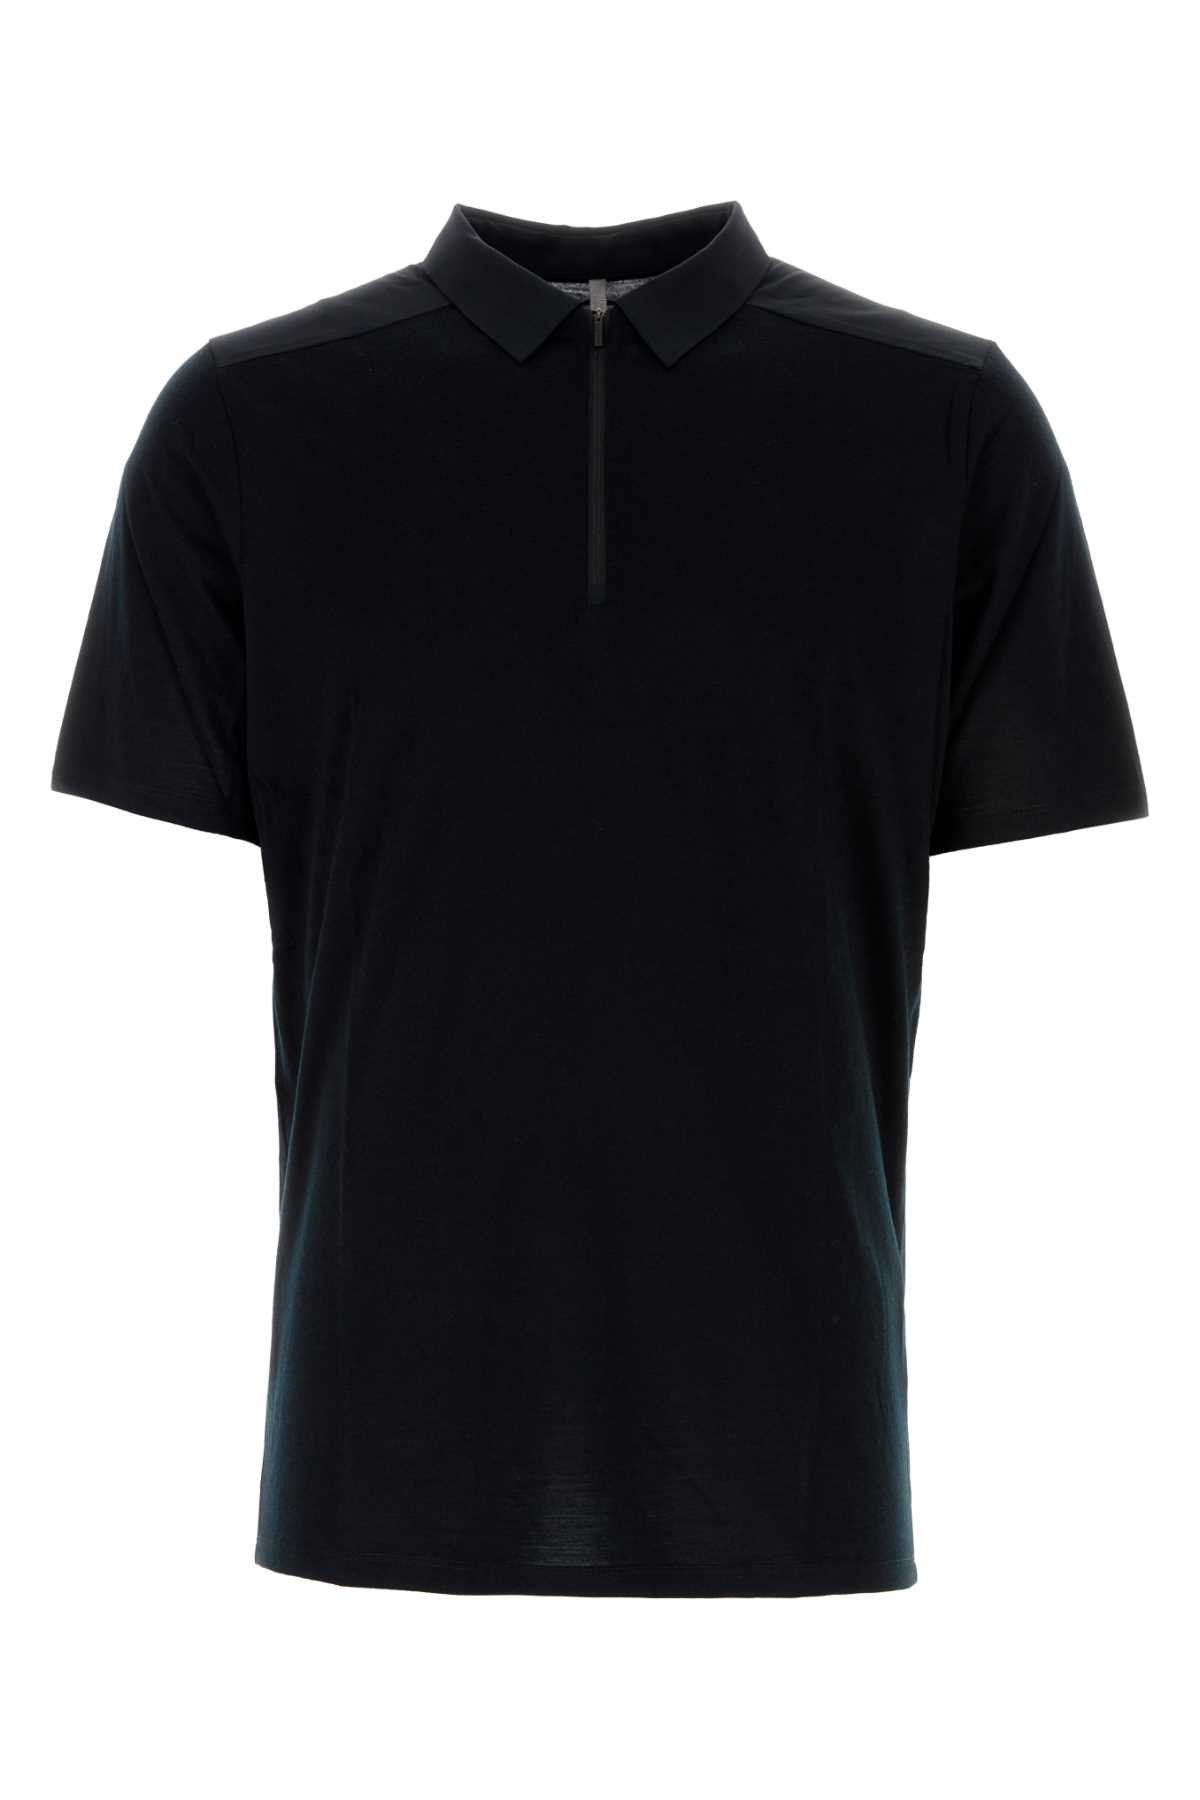 Arc'teryx Black Wool Blend Frame Polo Shirt